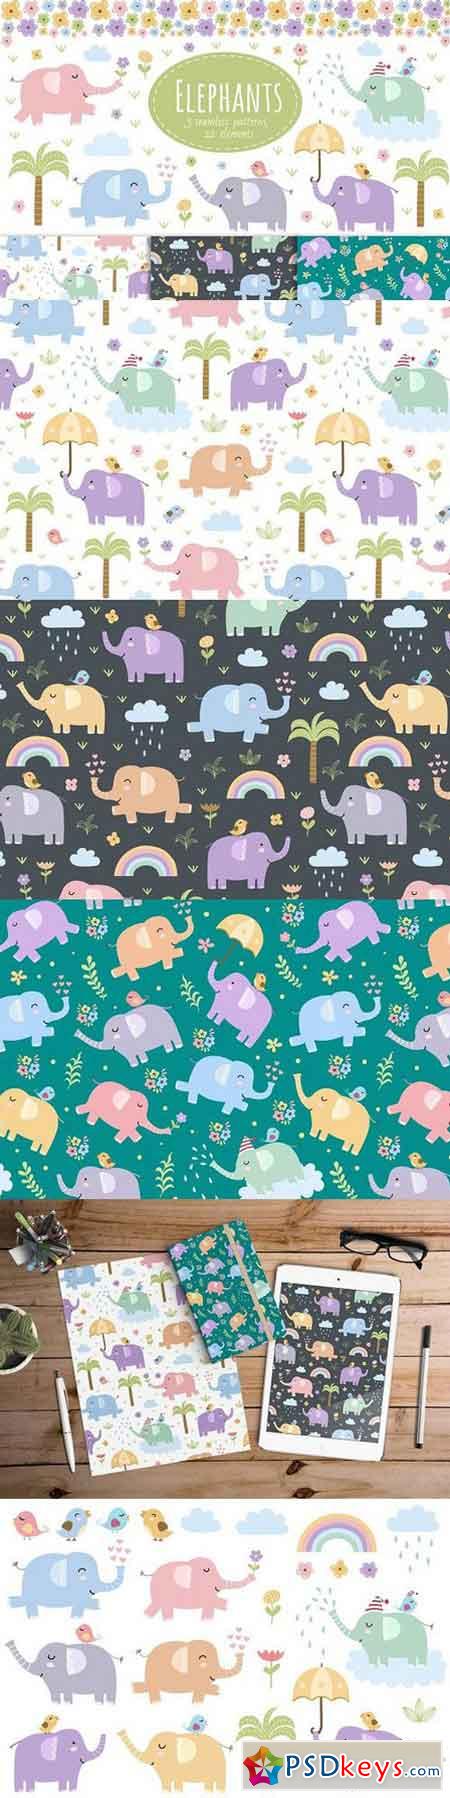 Elephants seamless patterns&clipart 985196